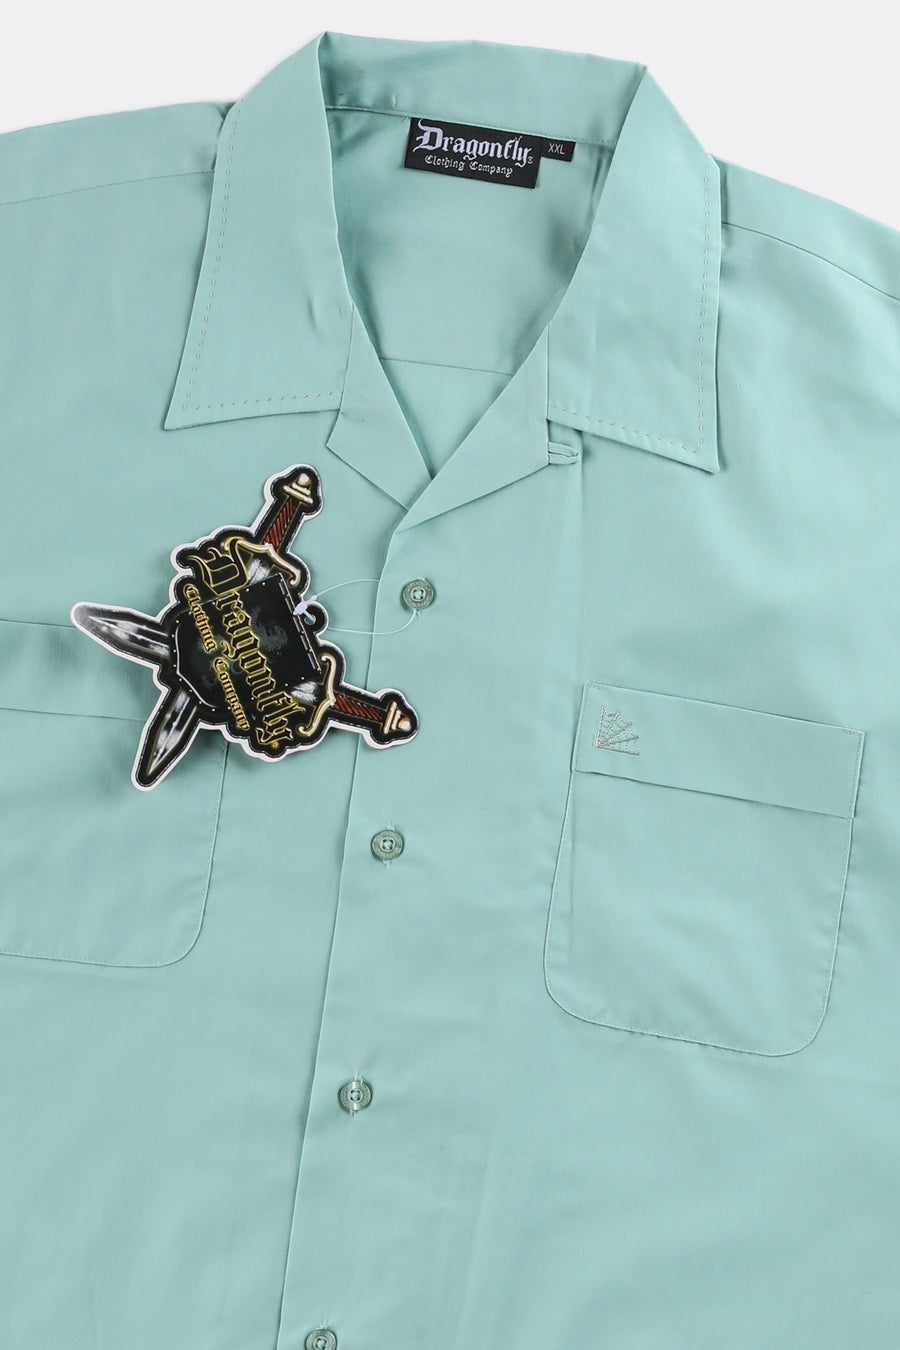 Deadstock Dragonfly Camp Shirt - M, L, XL, XXL